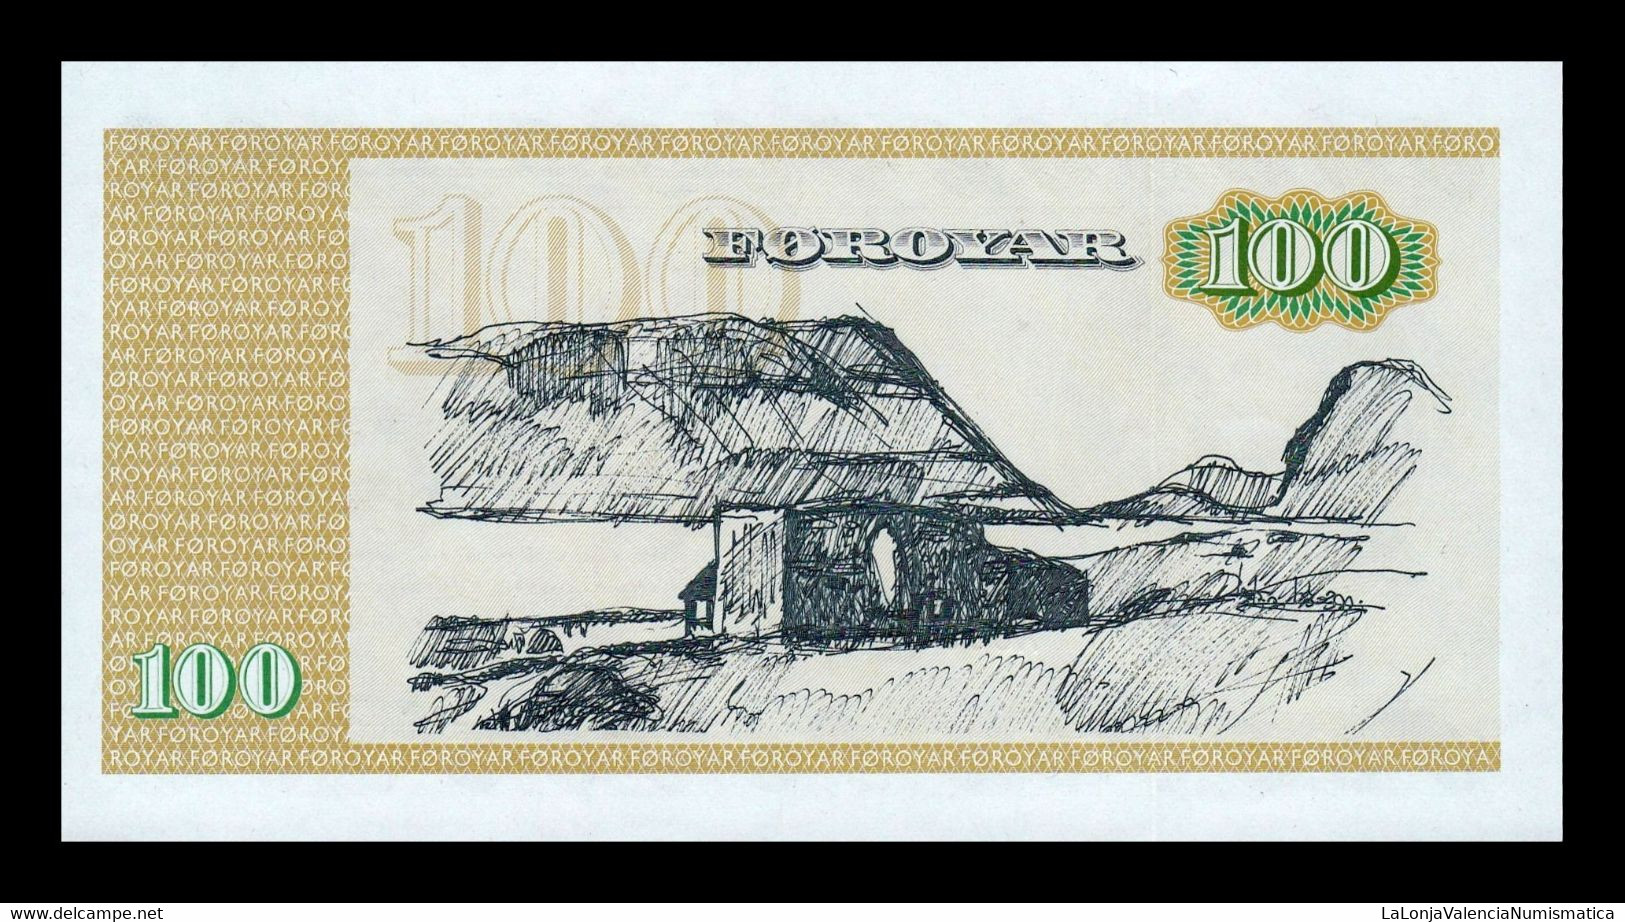 Islas Feroe Faeroe Islands 100 Kronur L.1949 (1990) Pick 21e SC UNC - Färöer Inseln